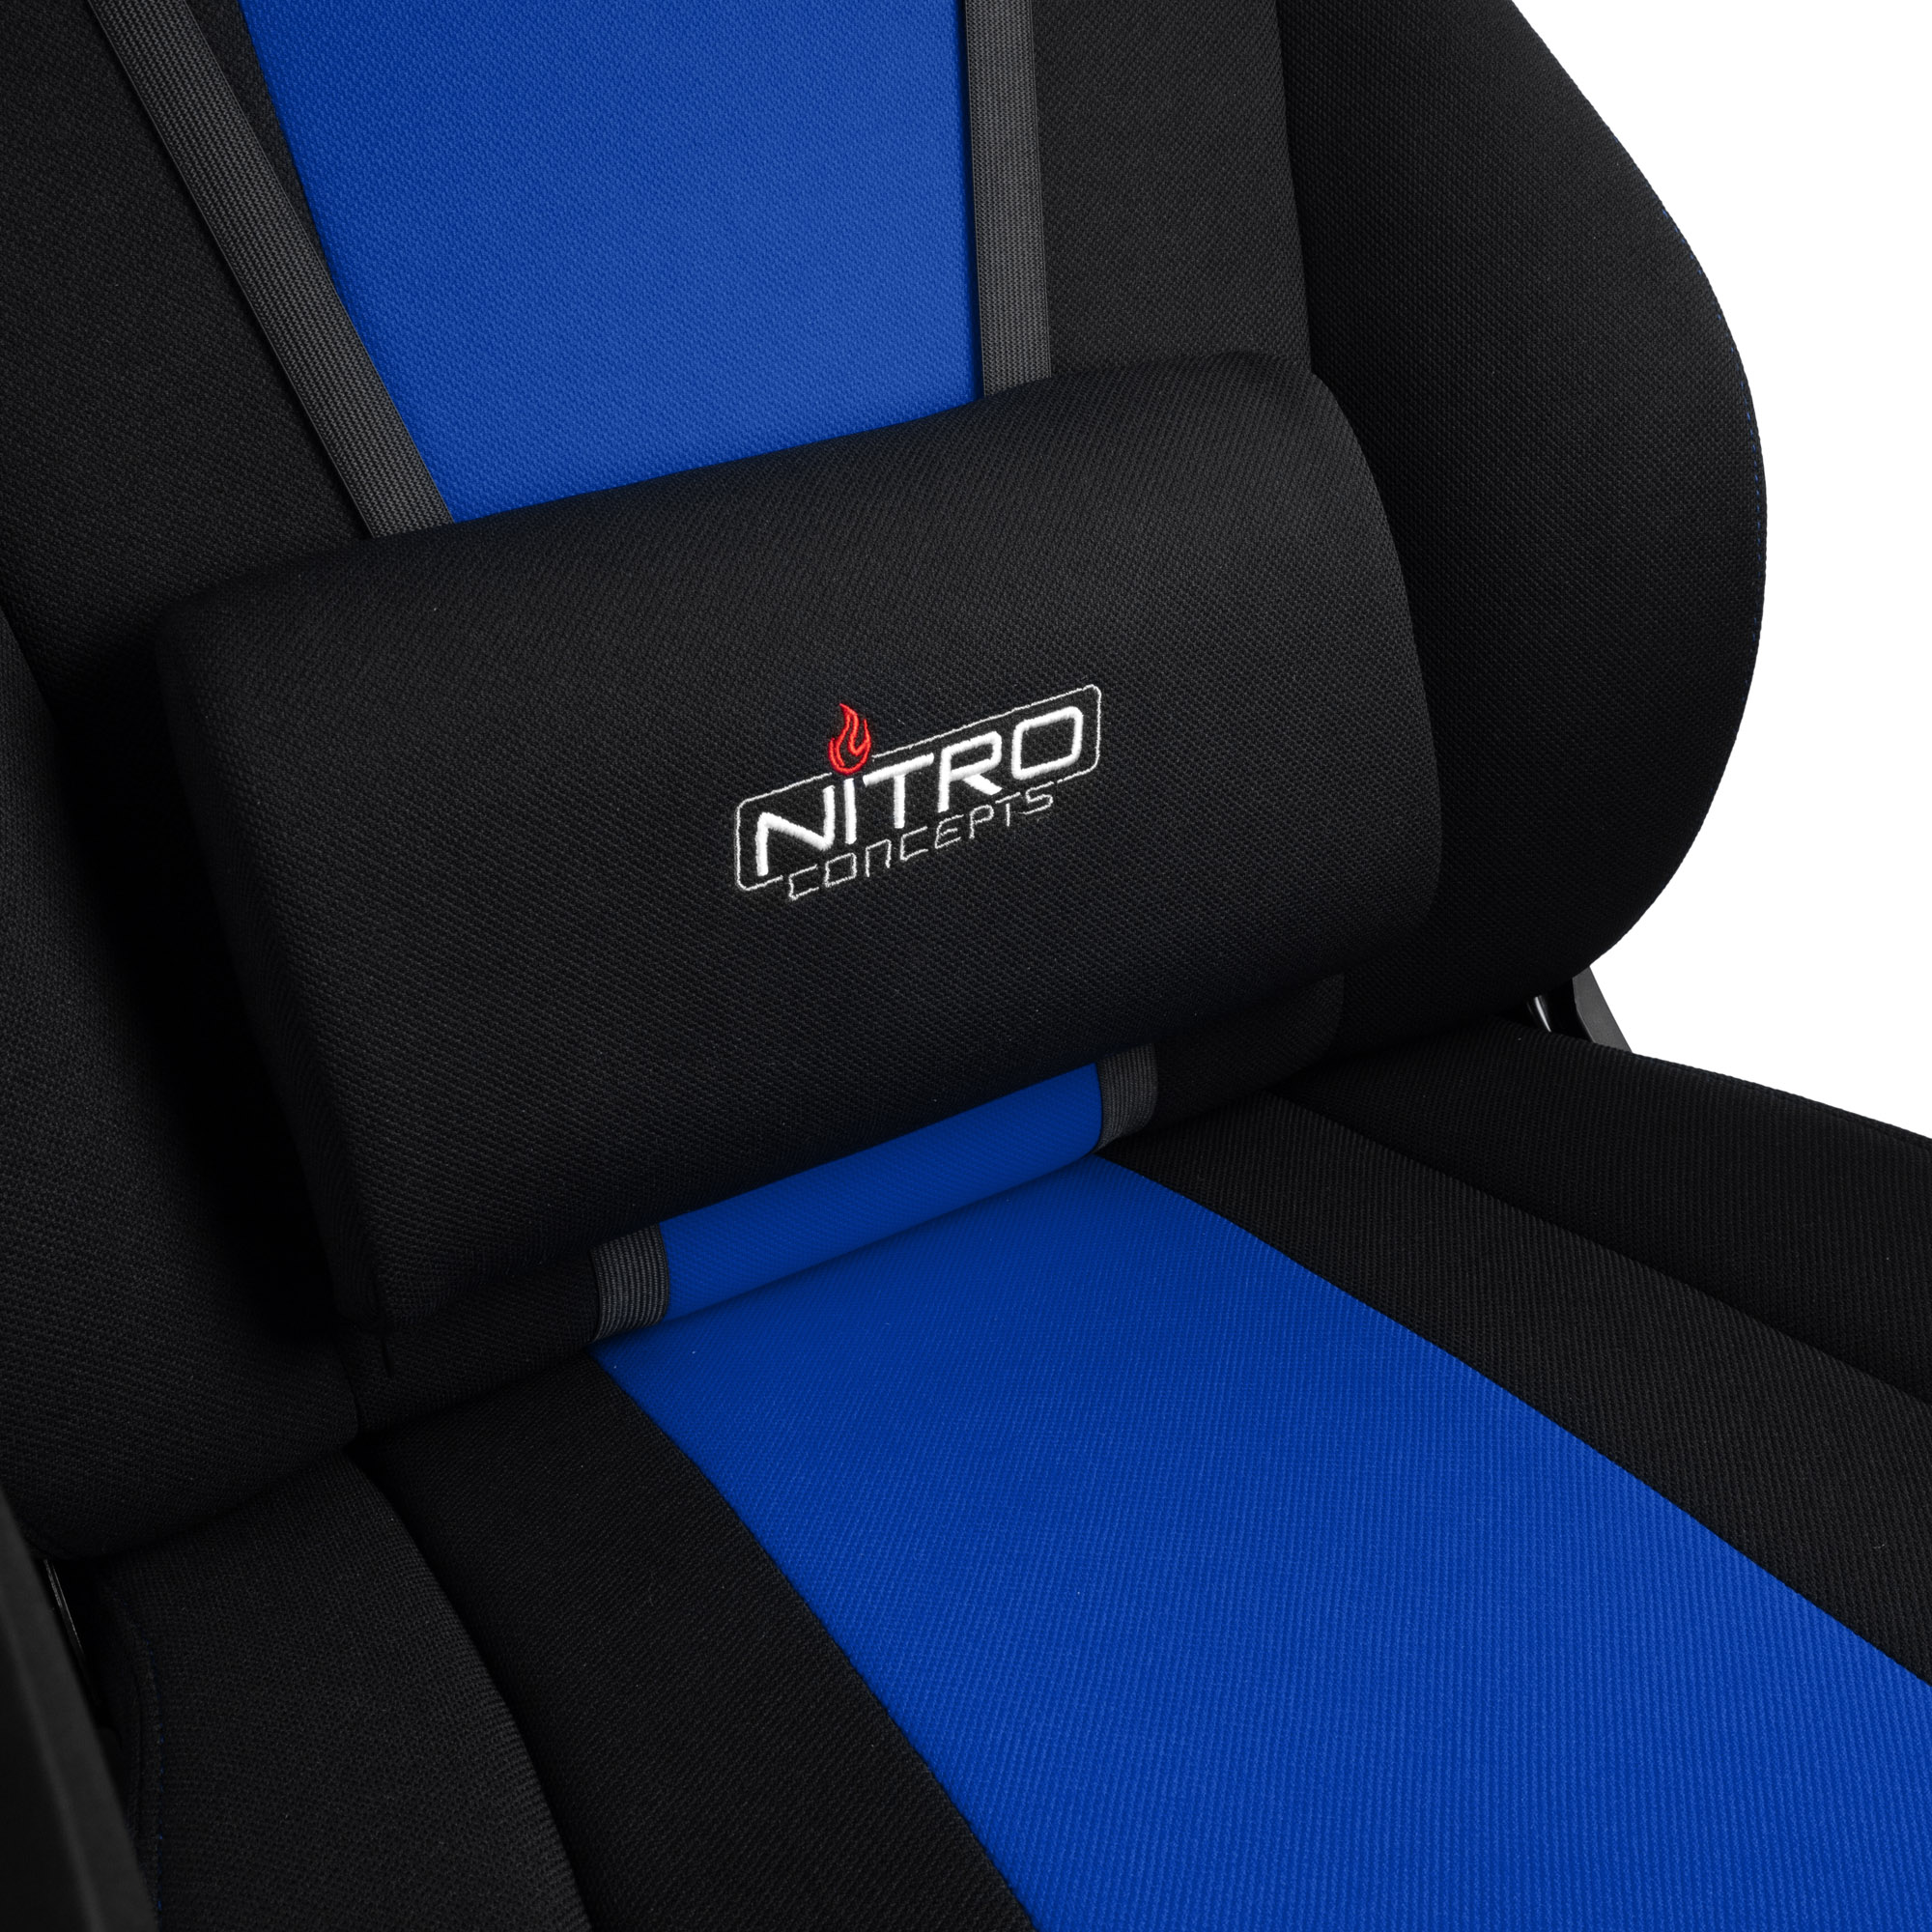 Nitro Concepts - E250 Gamestoel Zwart/Blauw